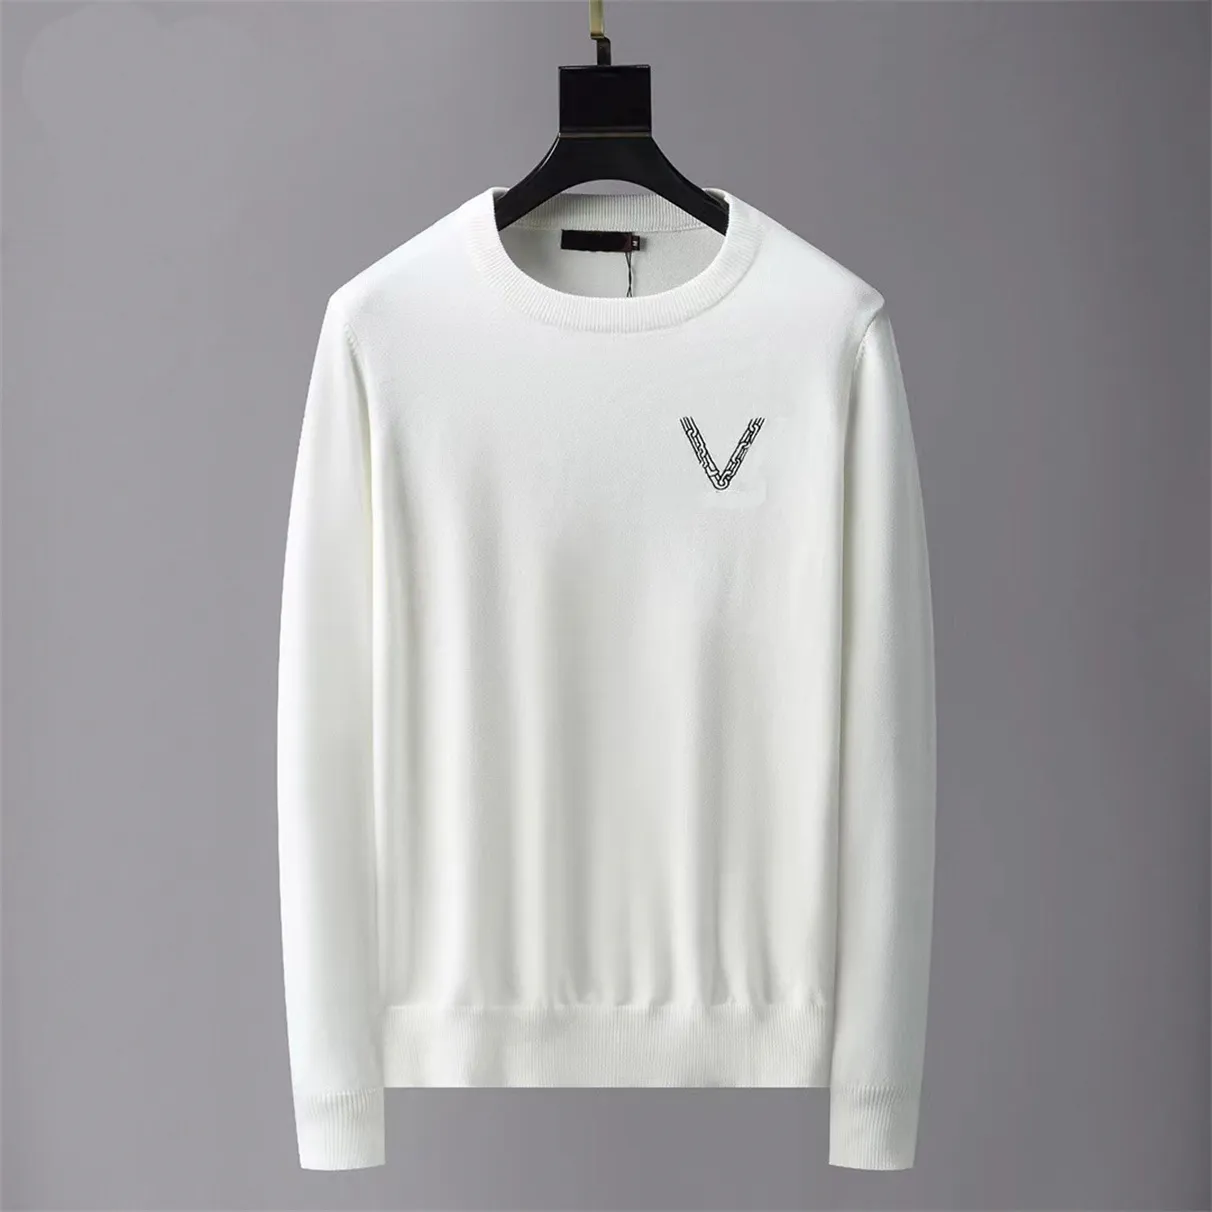 YY2023 디자이너 남자 스웨터 패션 스웨터 스웨터 스웨터 점퍼 까마귀 코트 스포츠웨어 캐주얼 커플 복장 M-3XL 아시아 크기